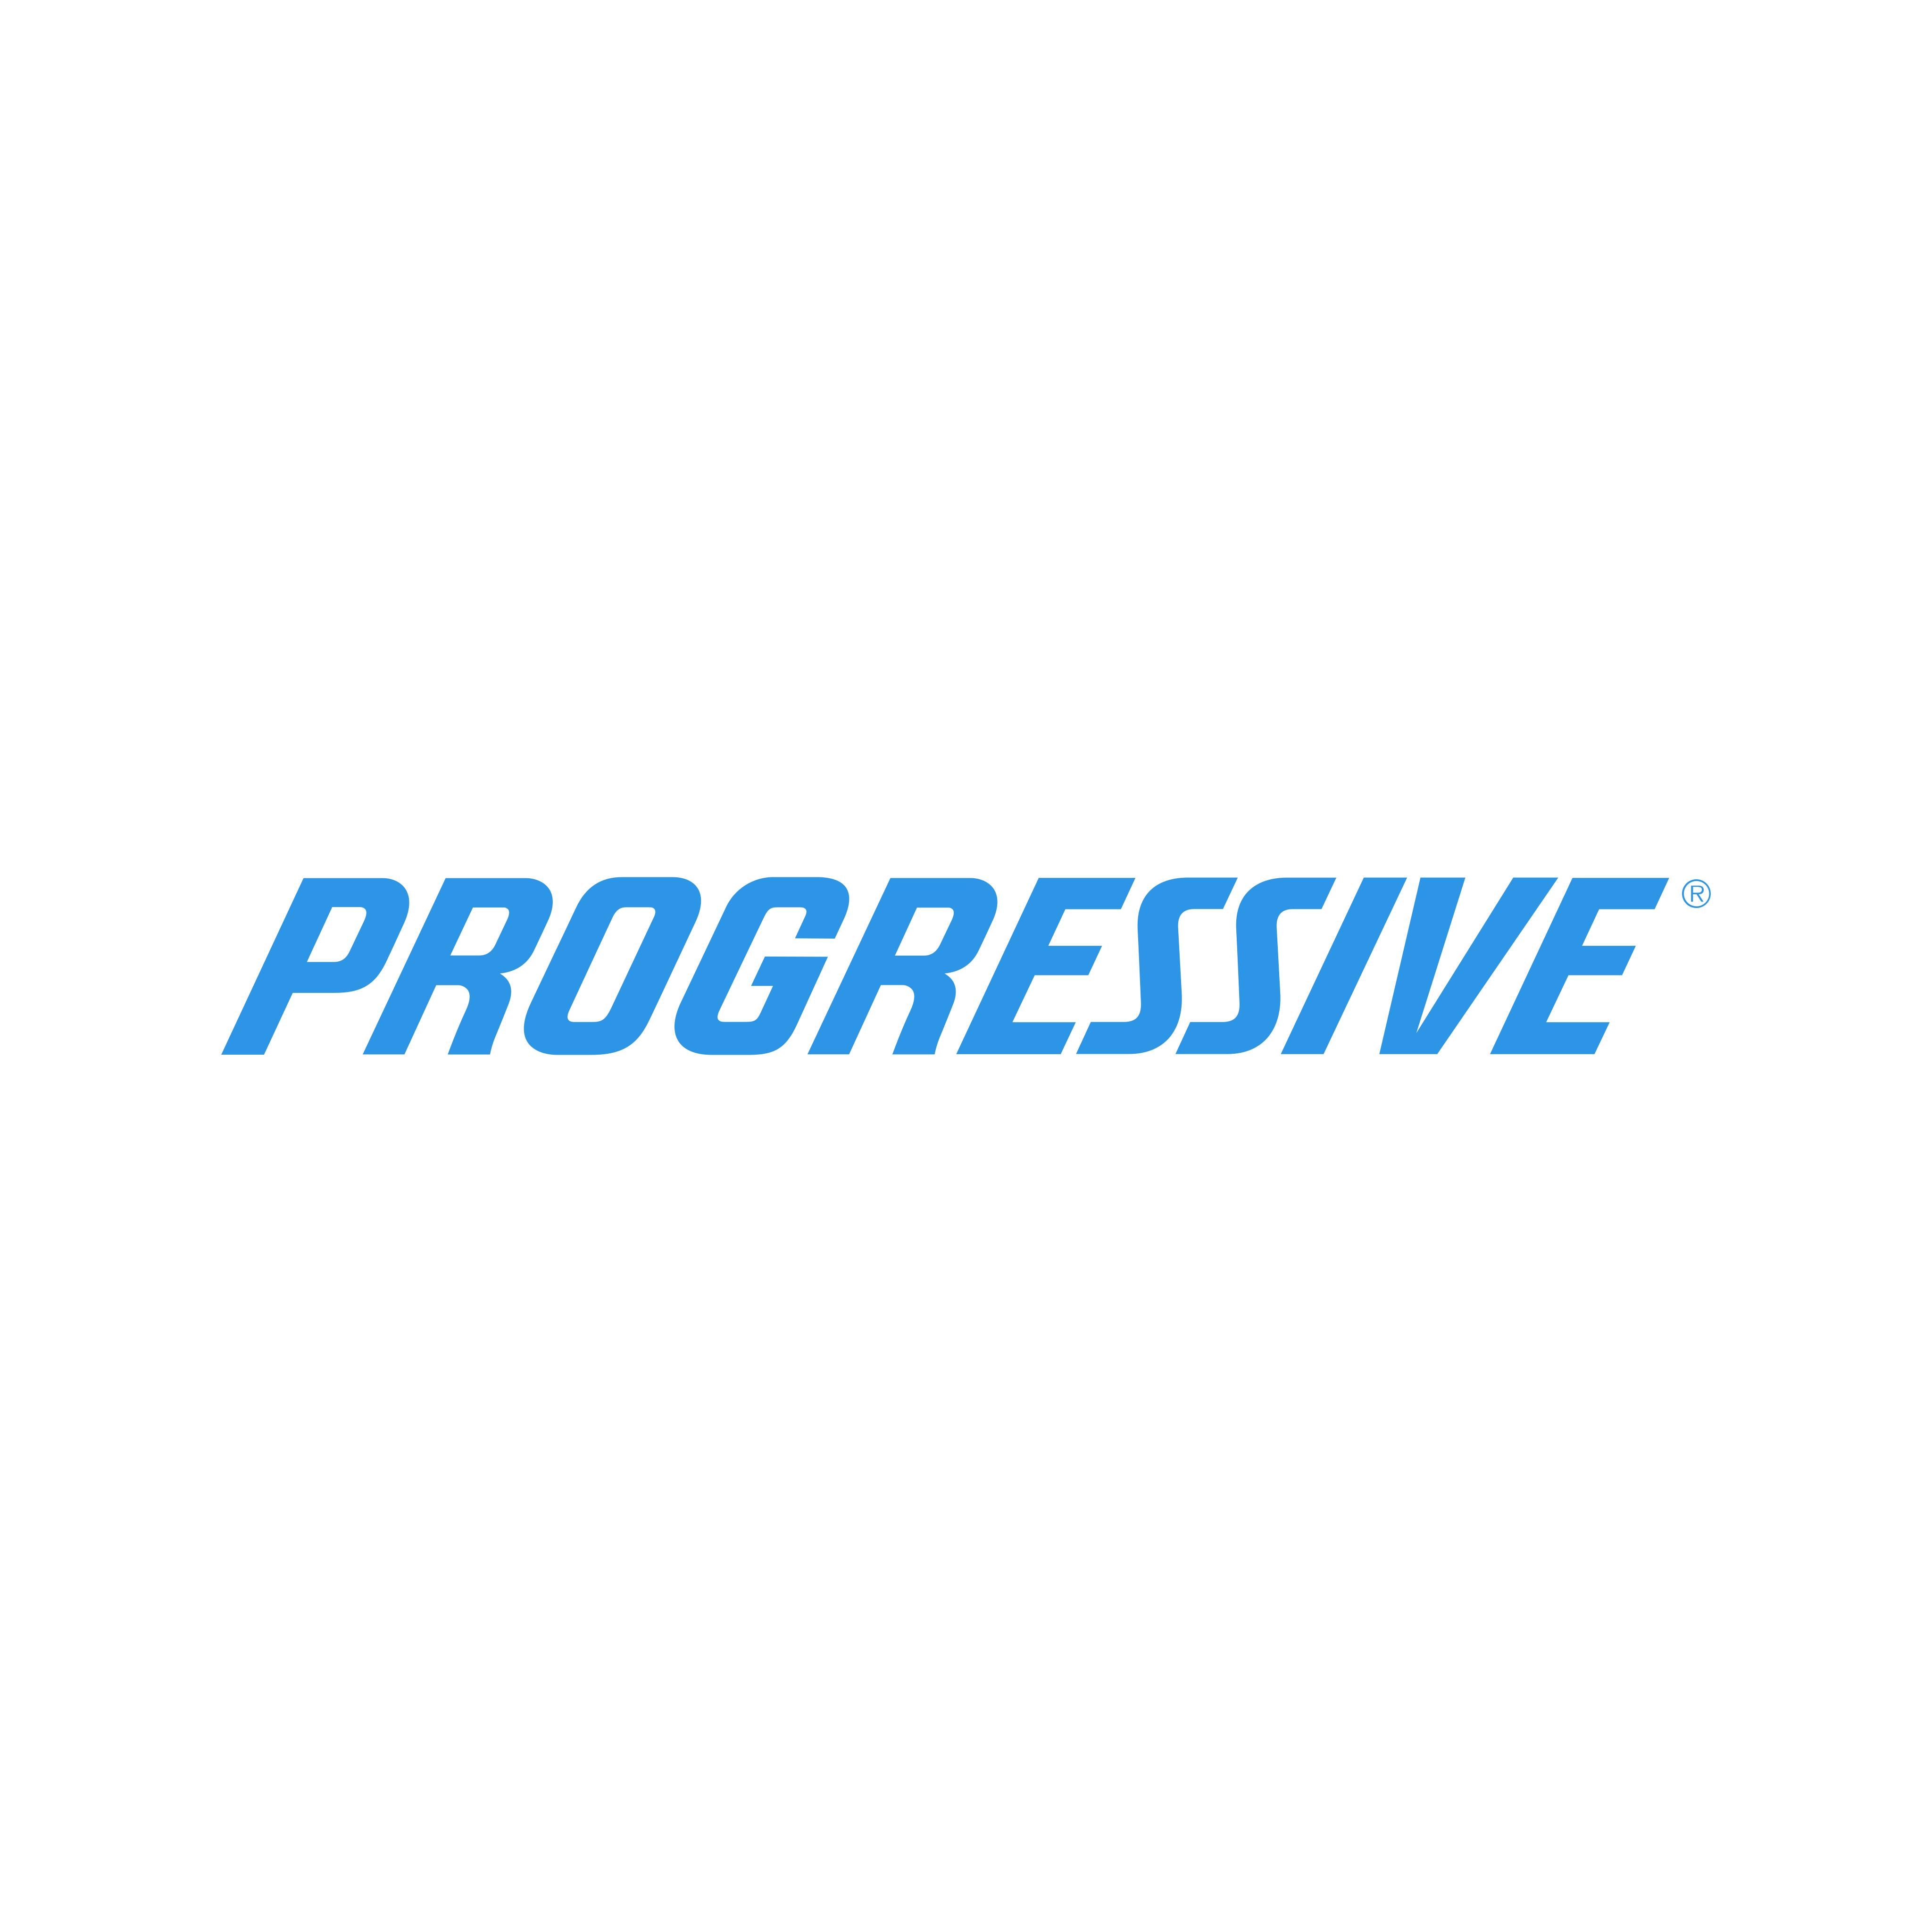 progressive logo 0 - Progressive Logo